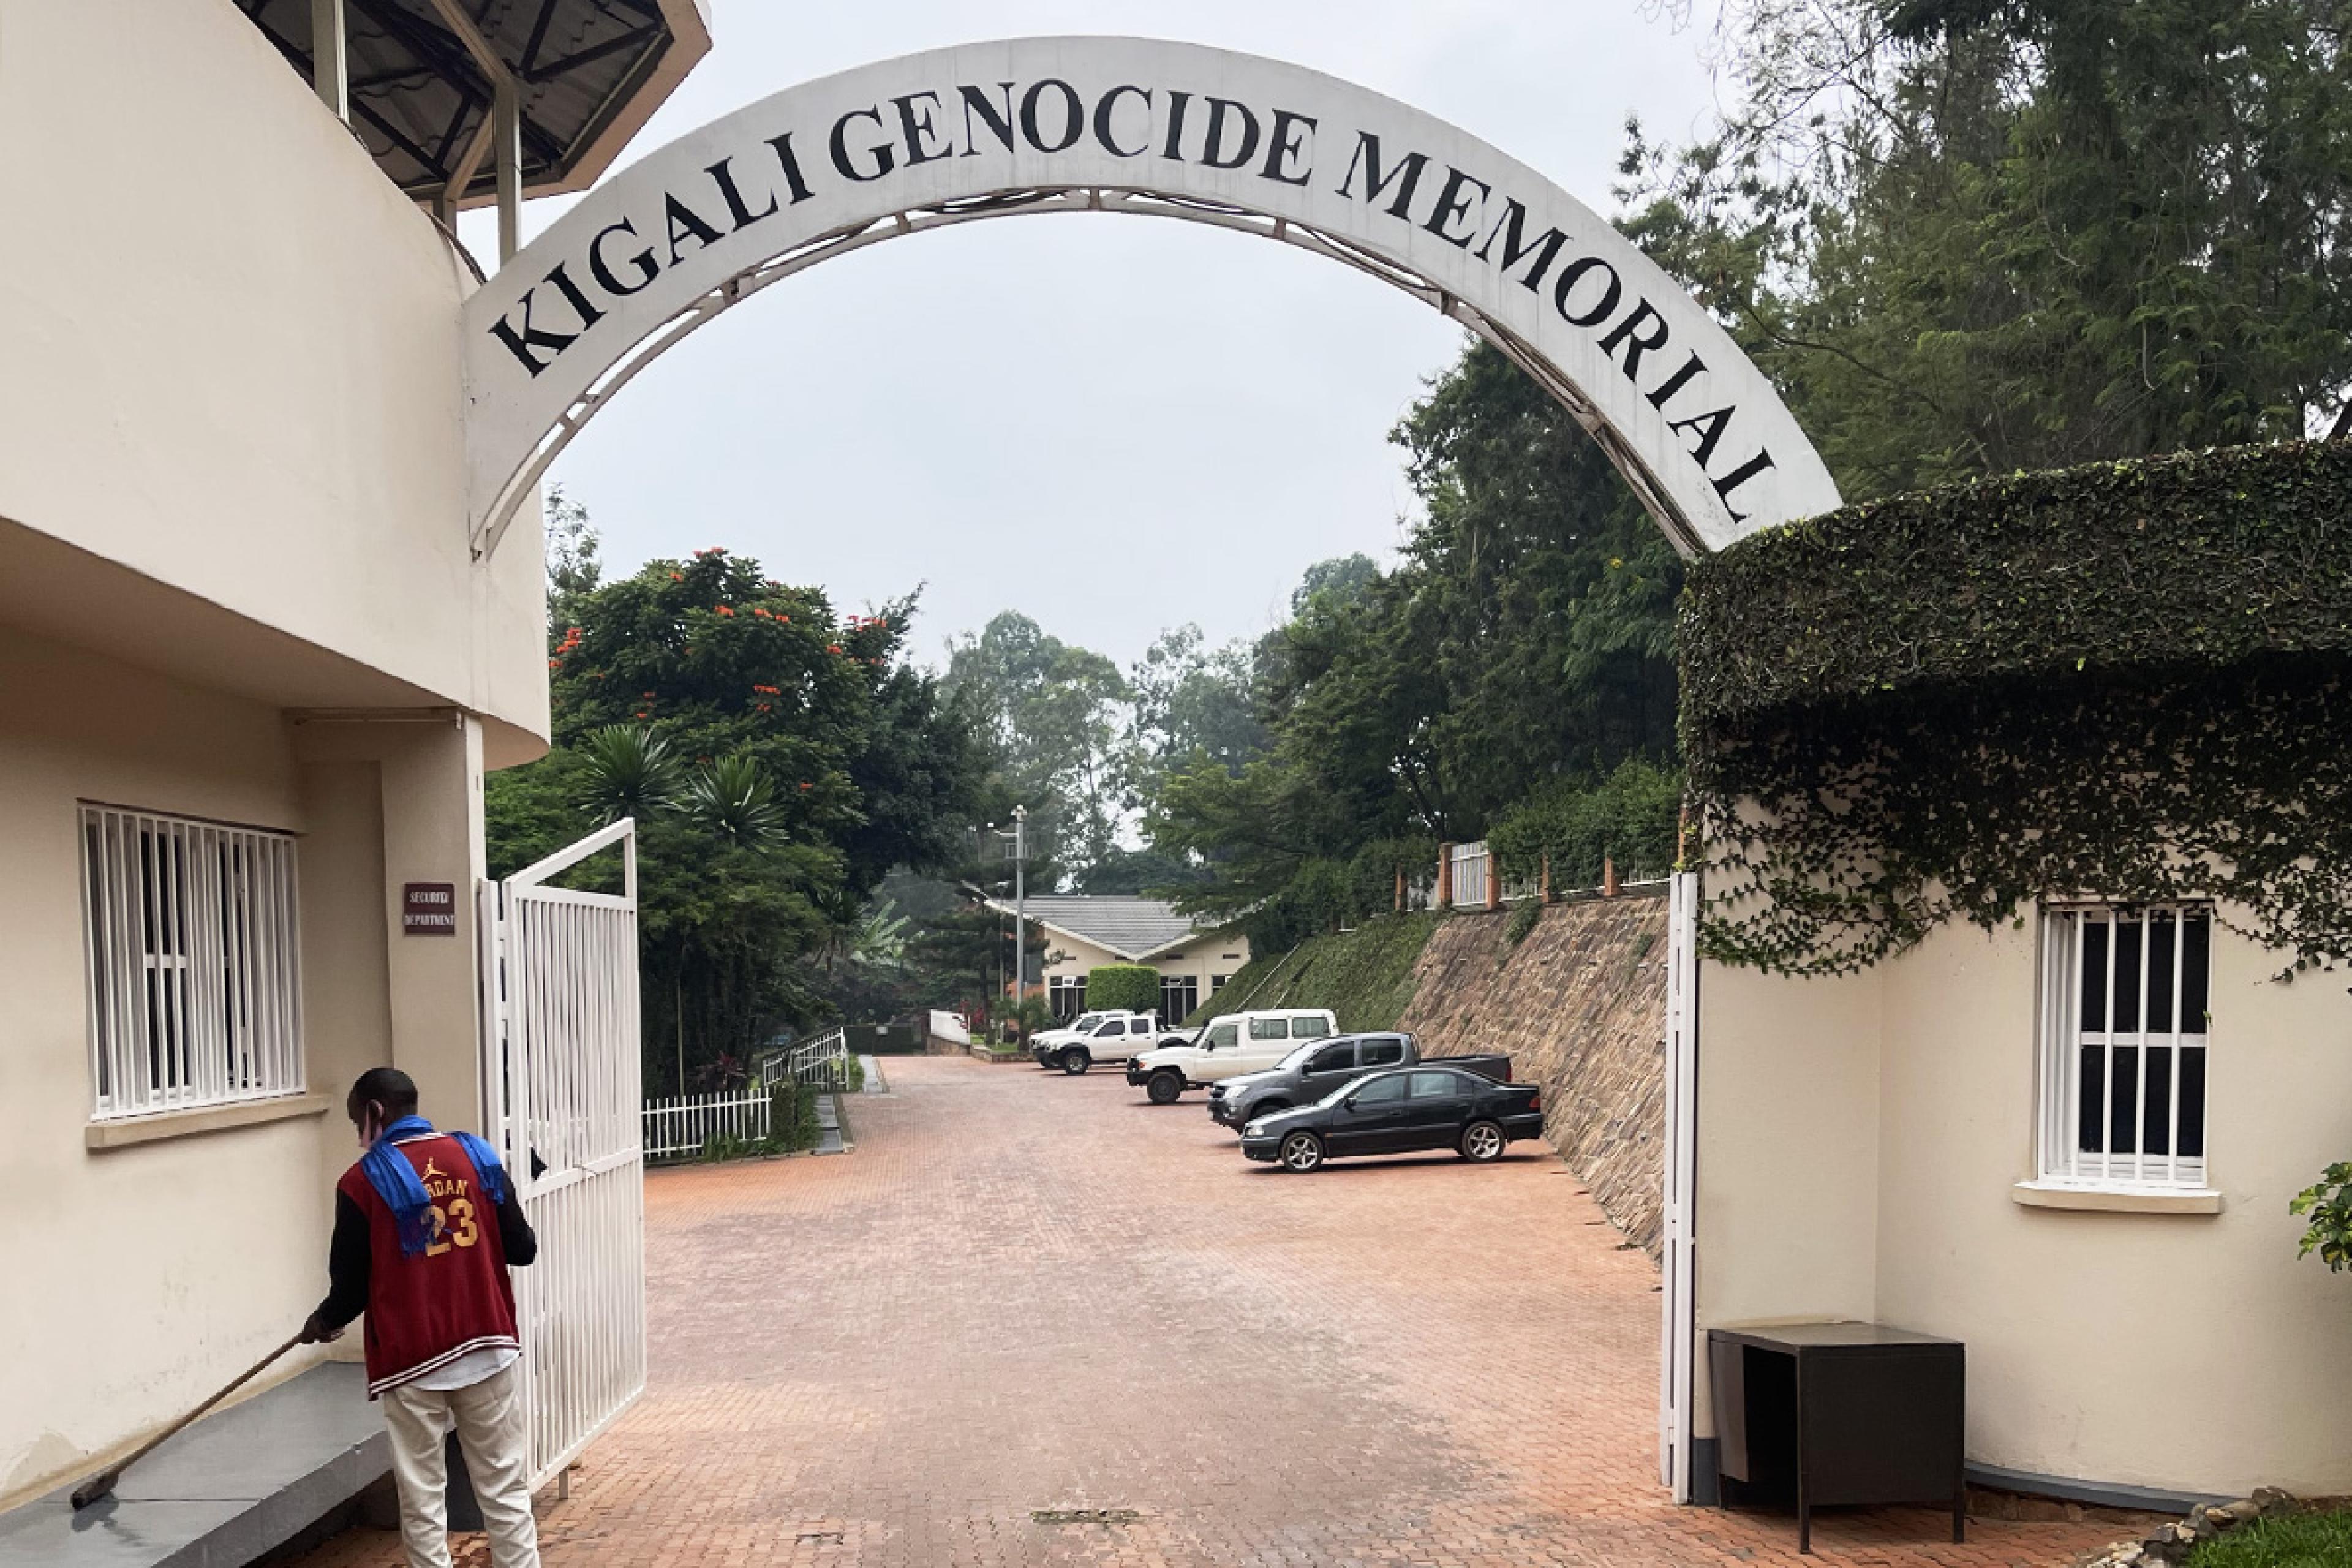 Kigali Genocide Memorial arched sign